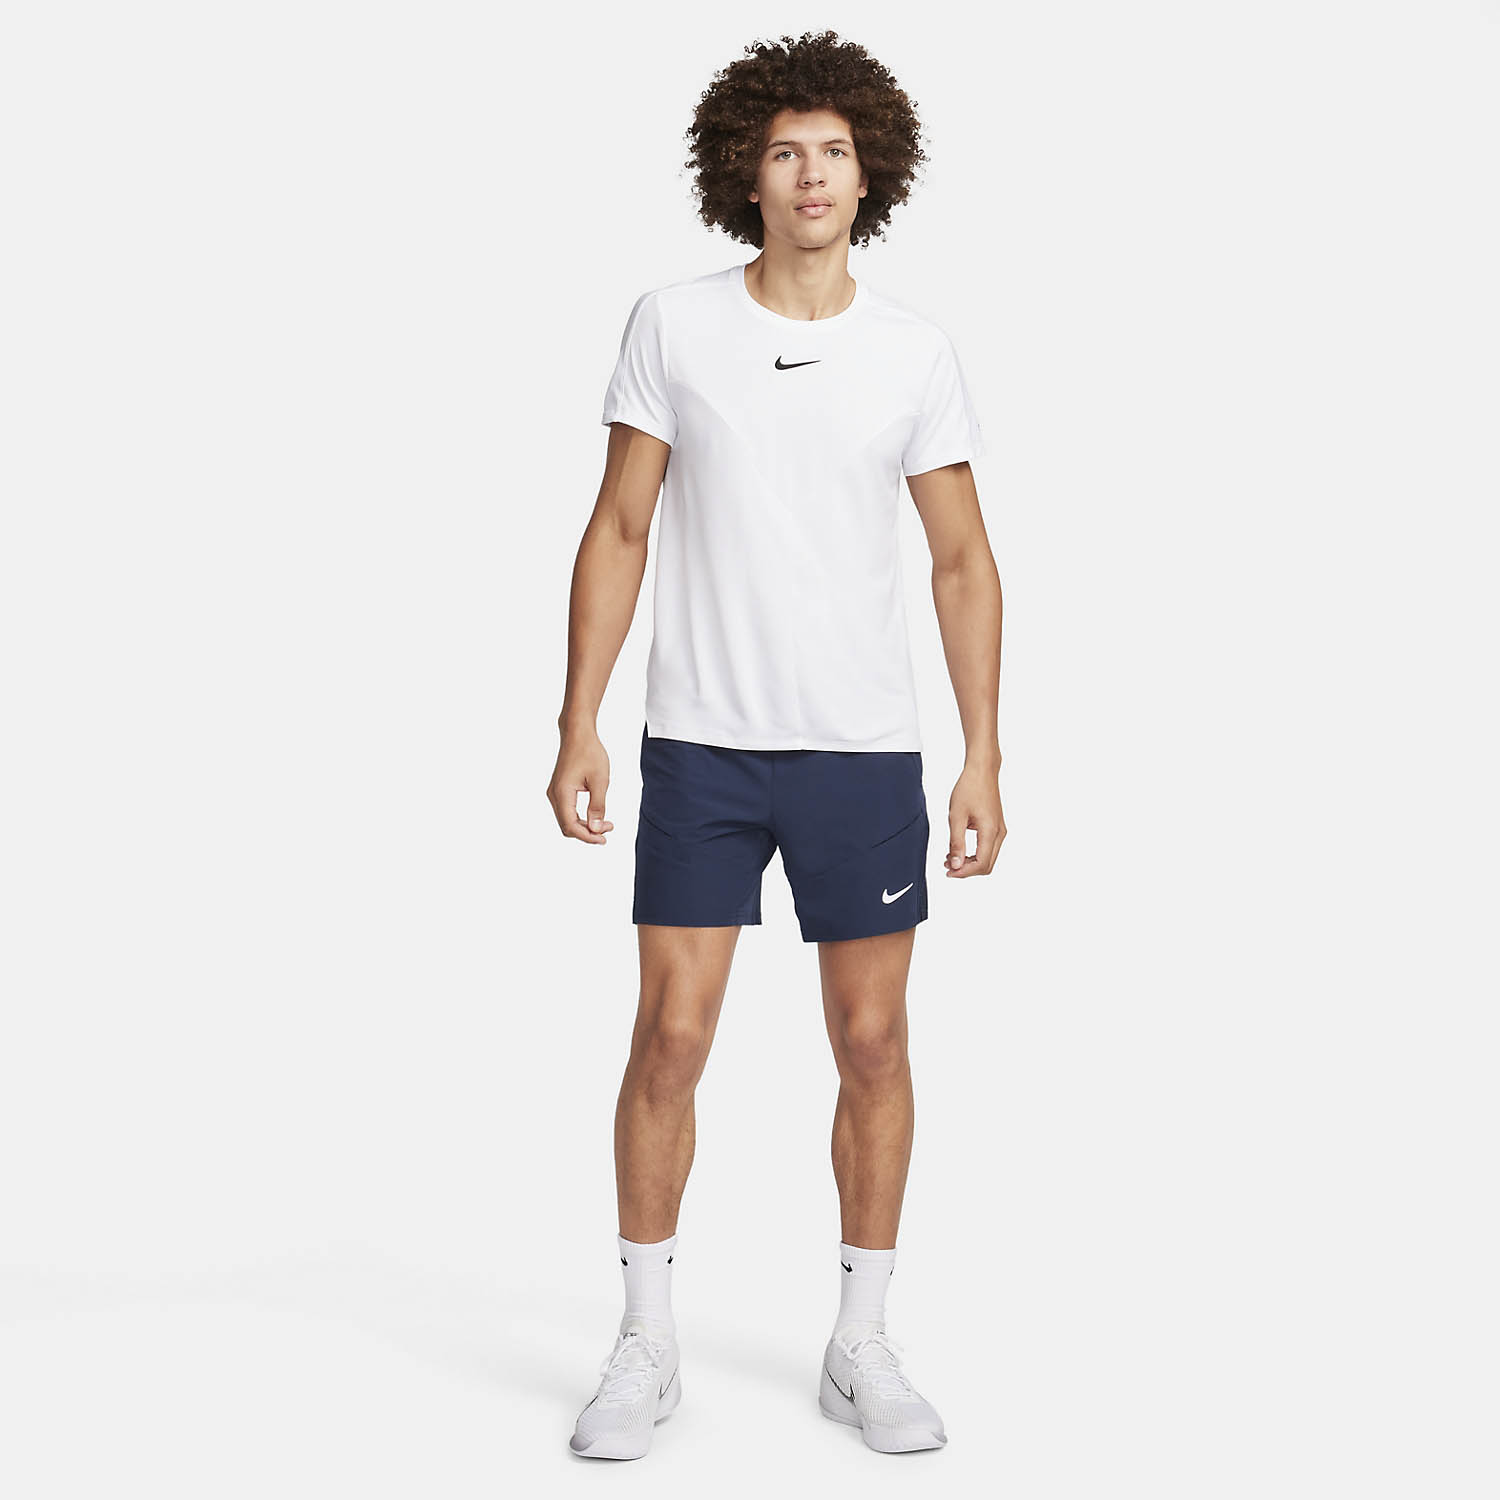 Nike Court Advantage 7in Shorts - Obsidian/White